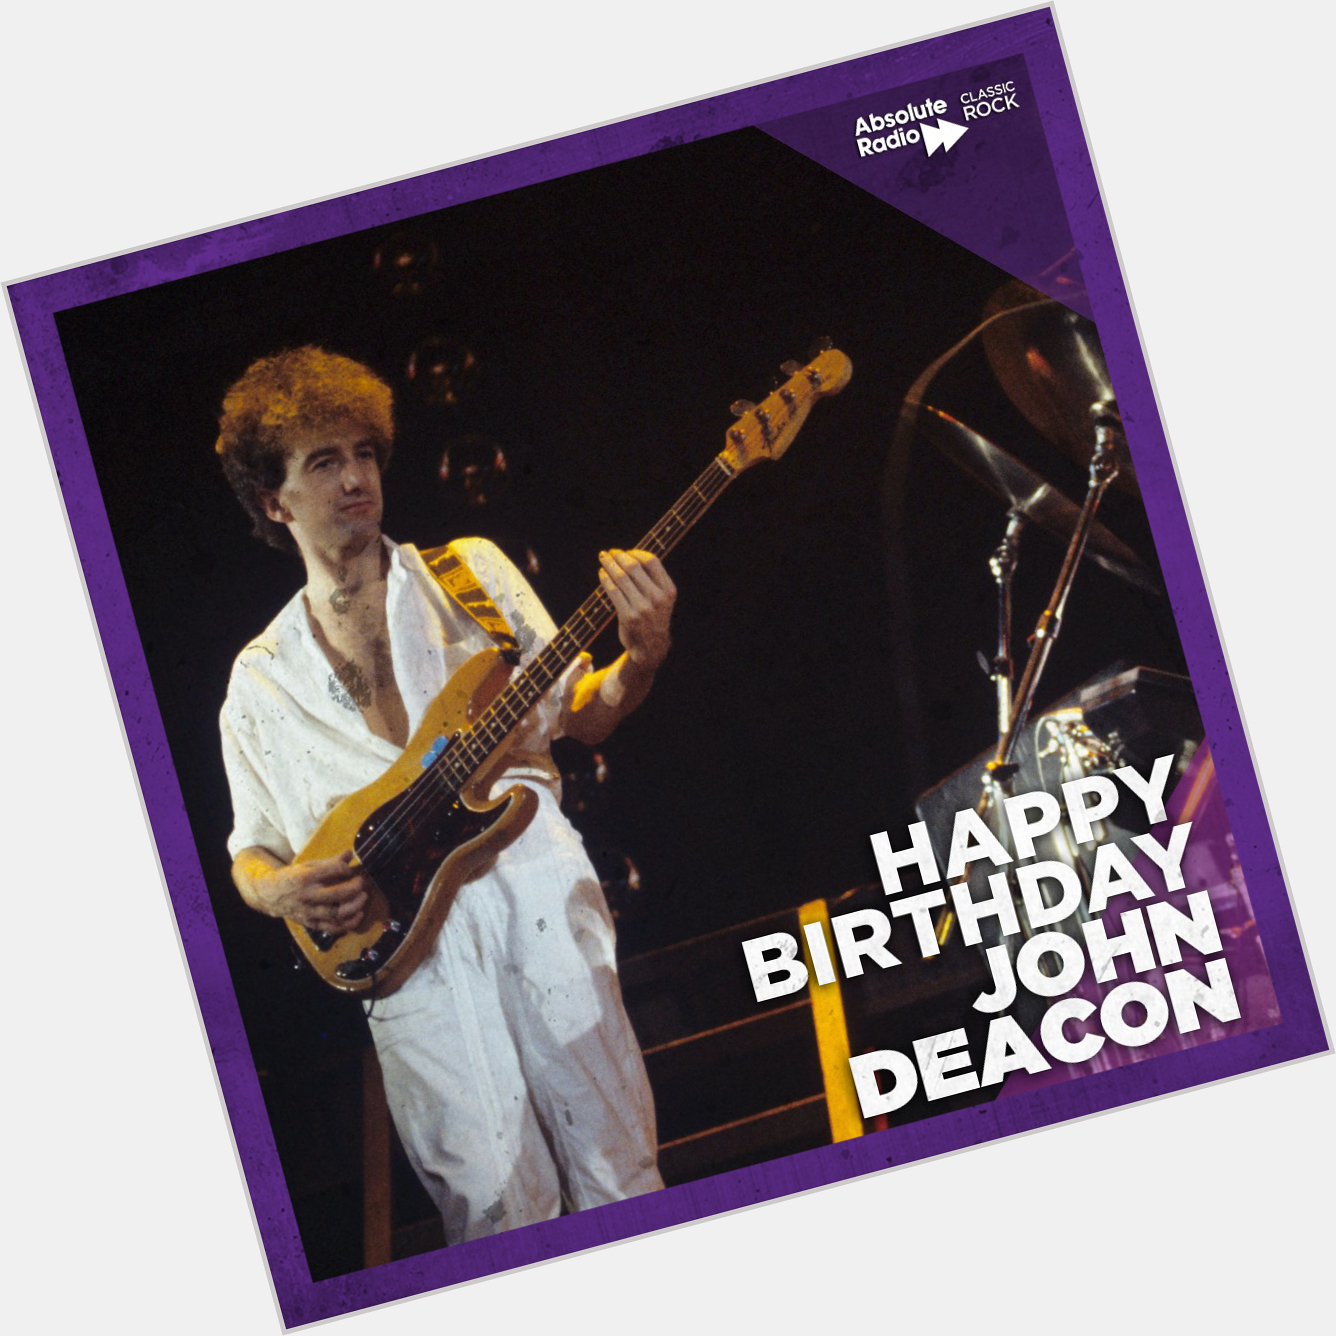 Wishing a happy birthday to bassist, John Deacon who turns 70 today! 